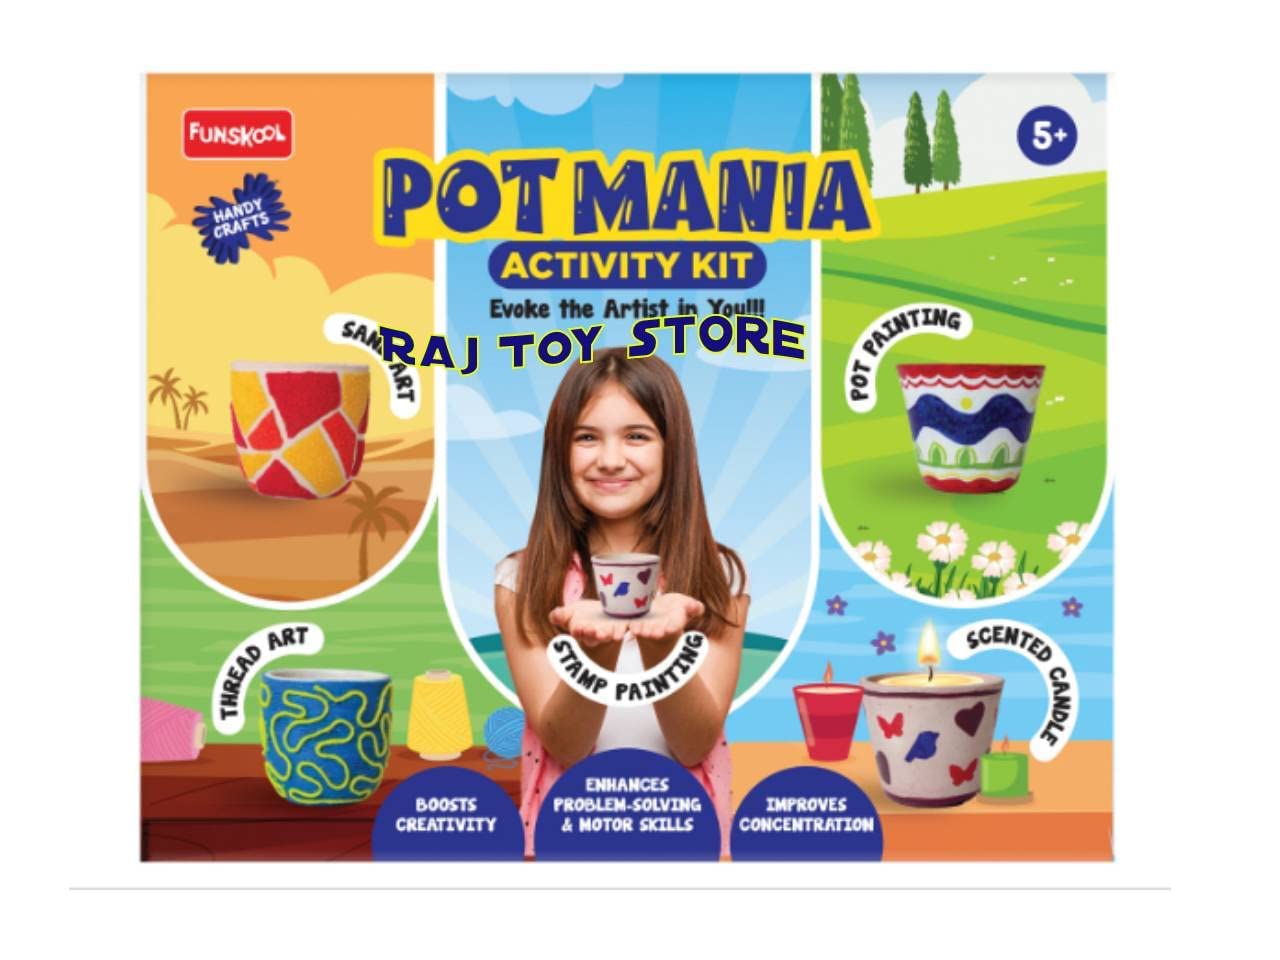 Funskool Potmania Activity Kit